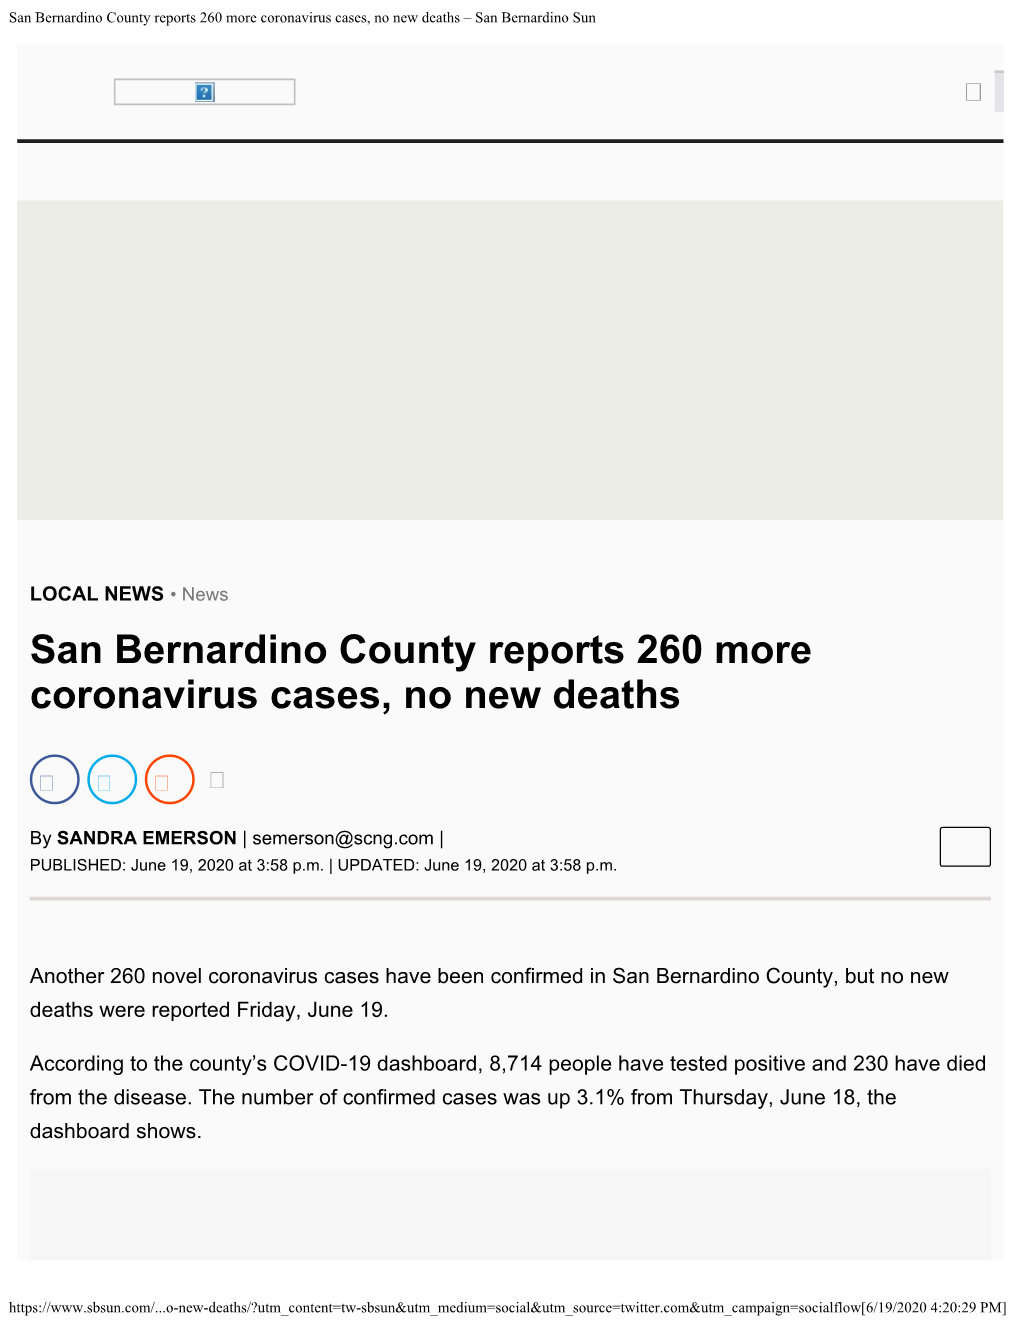 San Bernardino County Reports 260 More Coronavirus Cases, No New Deaths – San Bernardino Sun